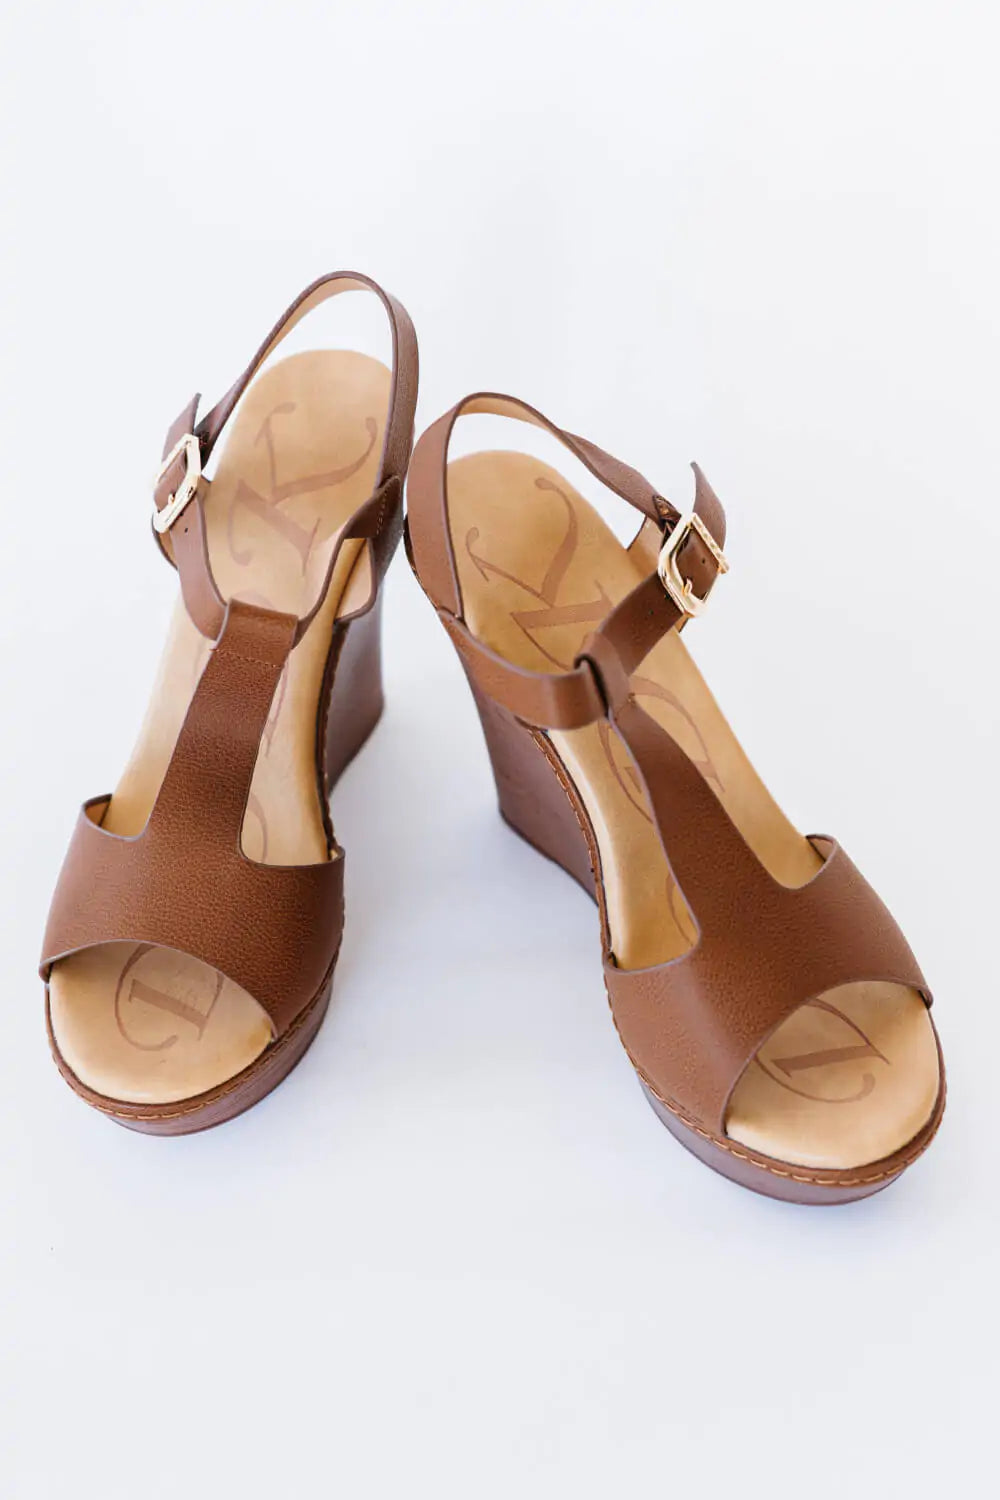 Tan Wedge Platform Sandals 7.5